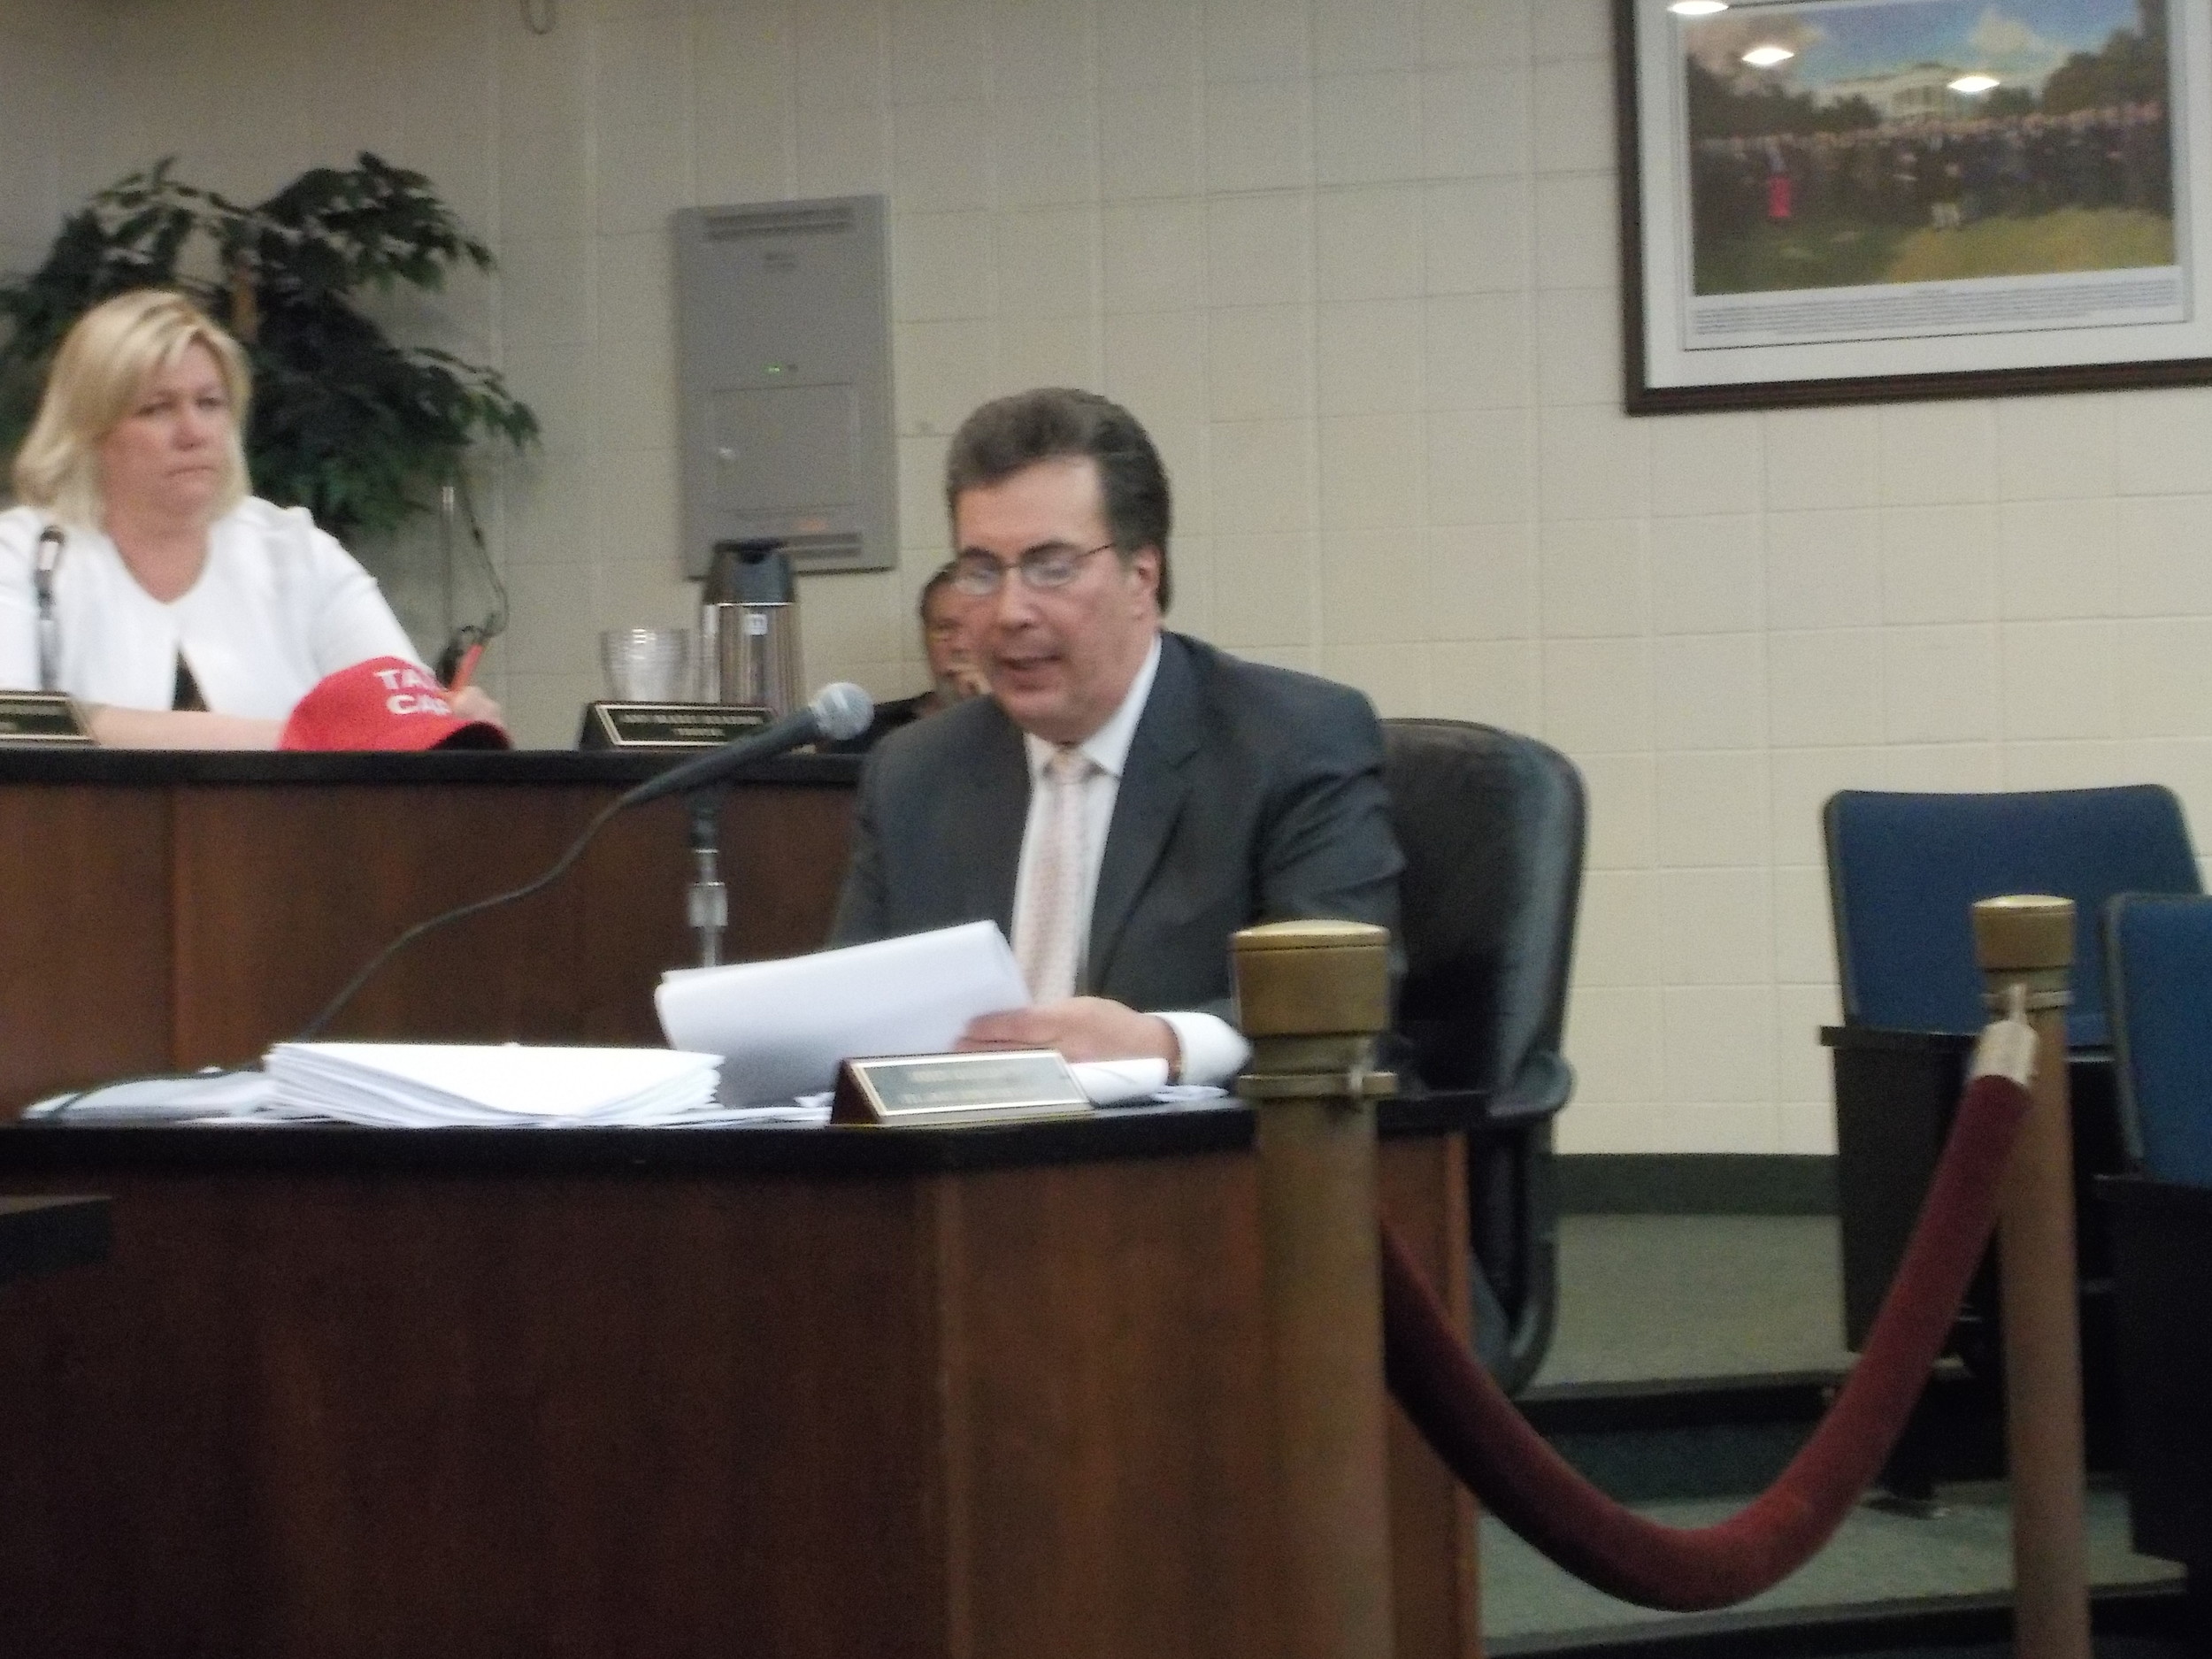 Lynbrook Village Administrator John Giordano presented the tentative 2017-18 budget at the April 17 board meeting.